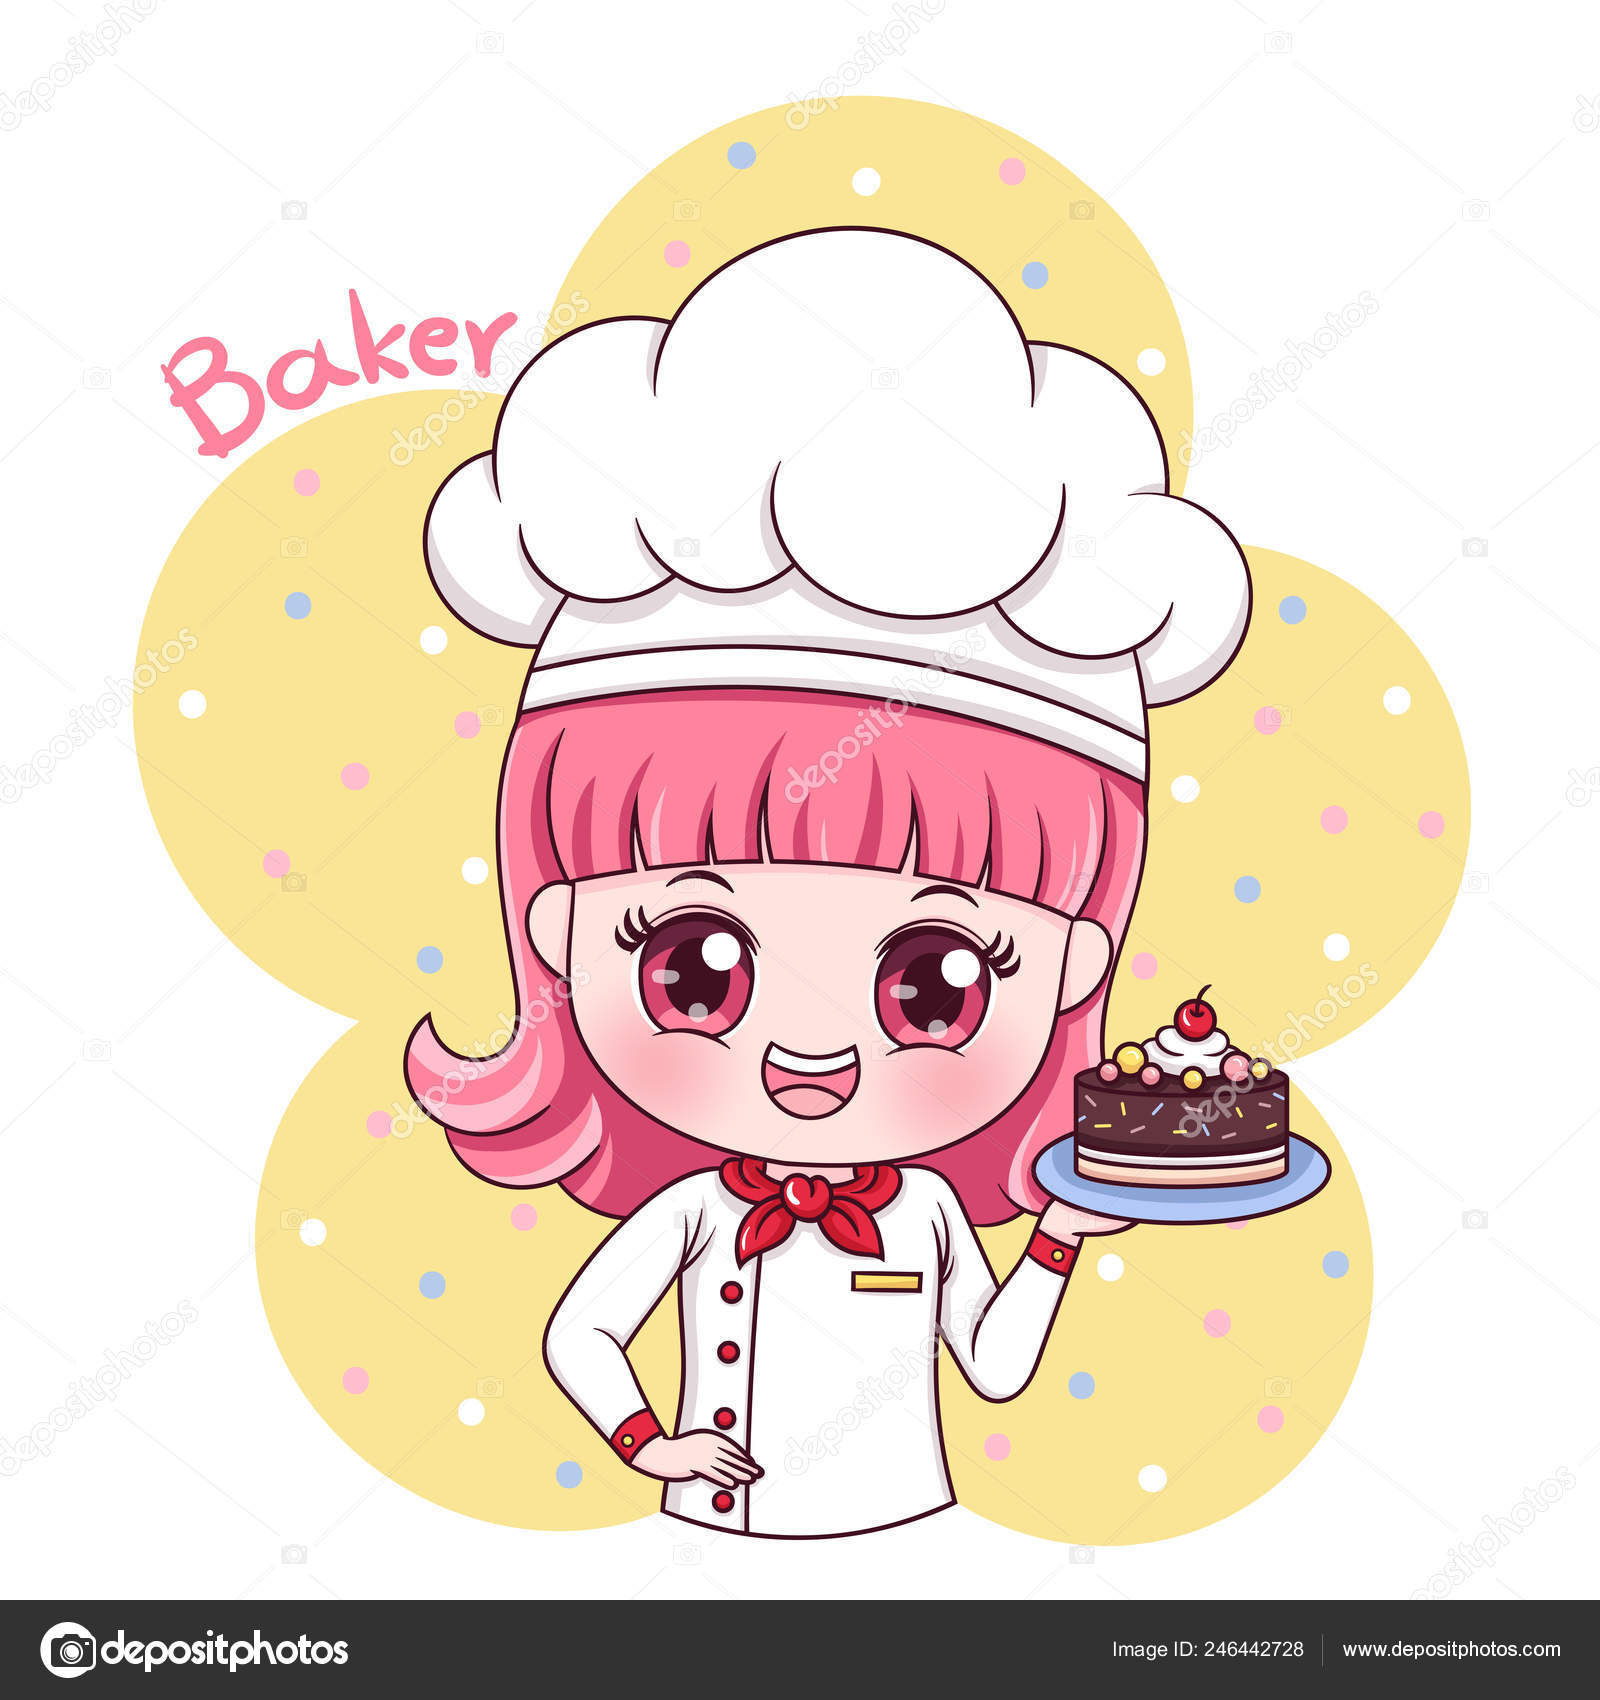 Sacrosegtam: Logo Cartoon Baker Girl